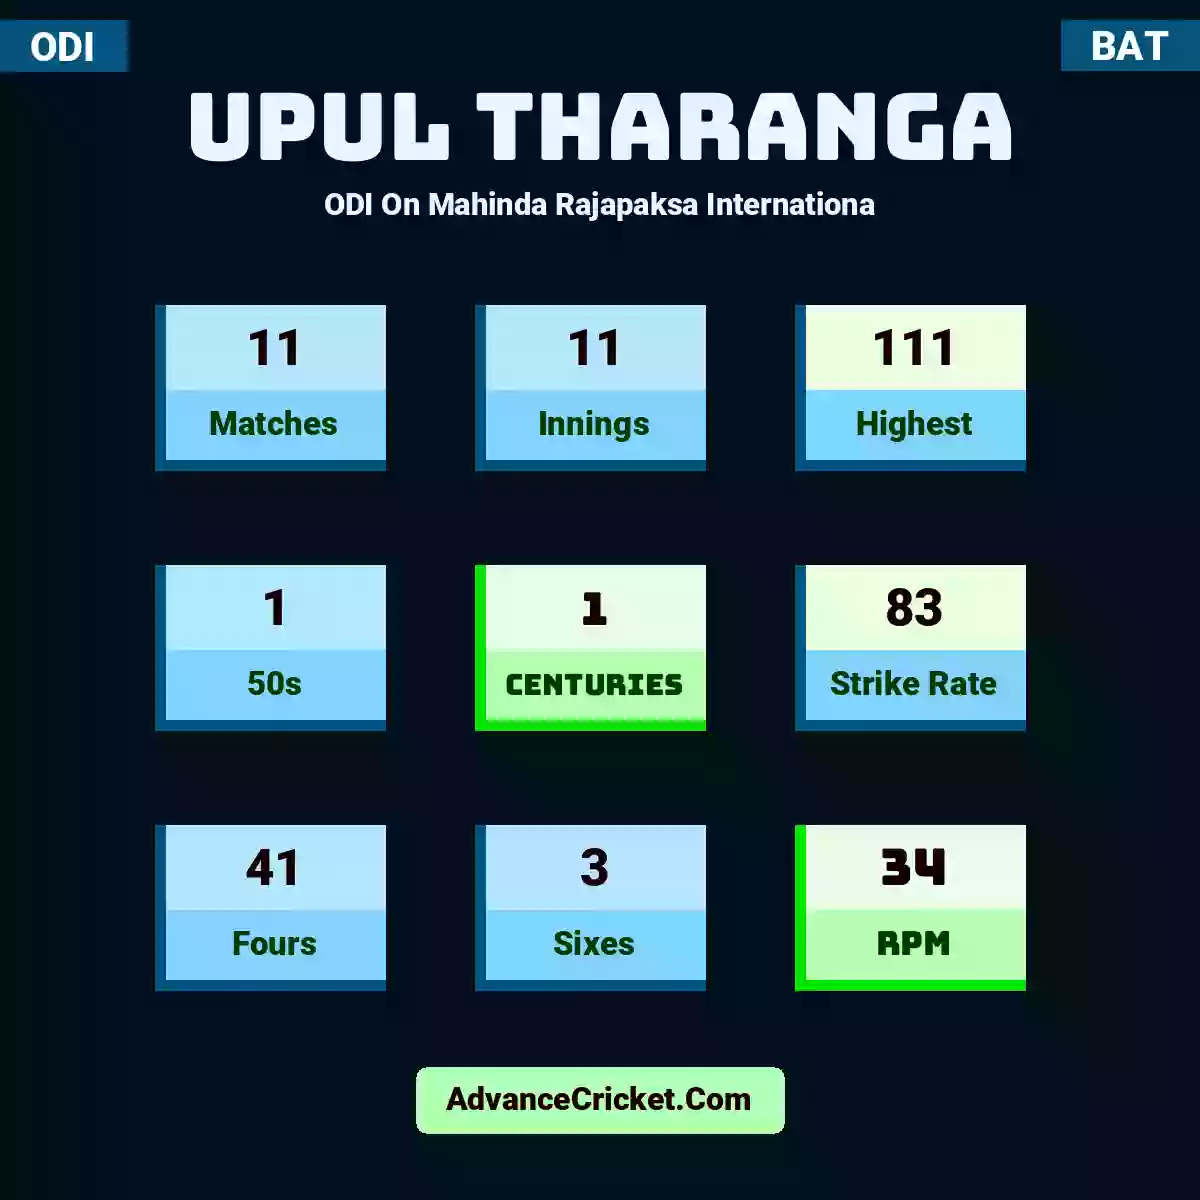 Upul Tharanga ODI  On Mahinda Rajapaksa Internationa, Upul Tharanga played 11 matches, scored 111 runs as highest, 1 half-centuries, and 1 centuries, with a strike rate of 83. U.Tharanga hit 41 fours and 3 sixes, with an RPM of 34.